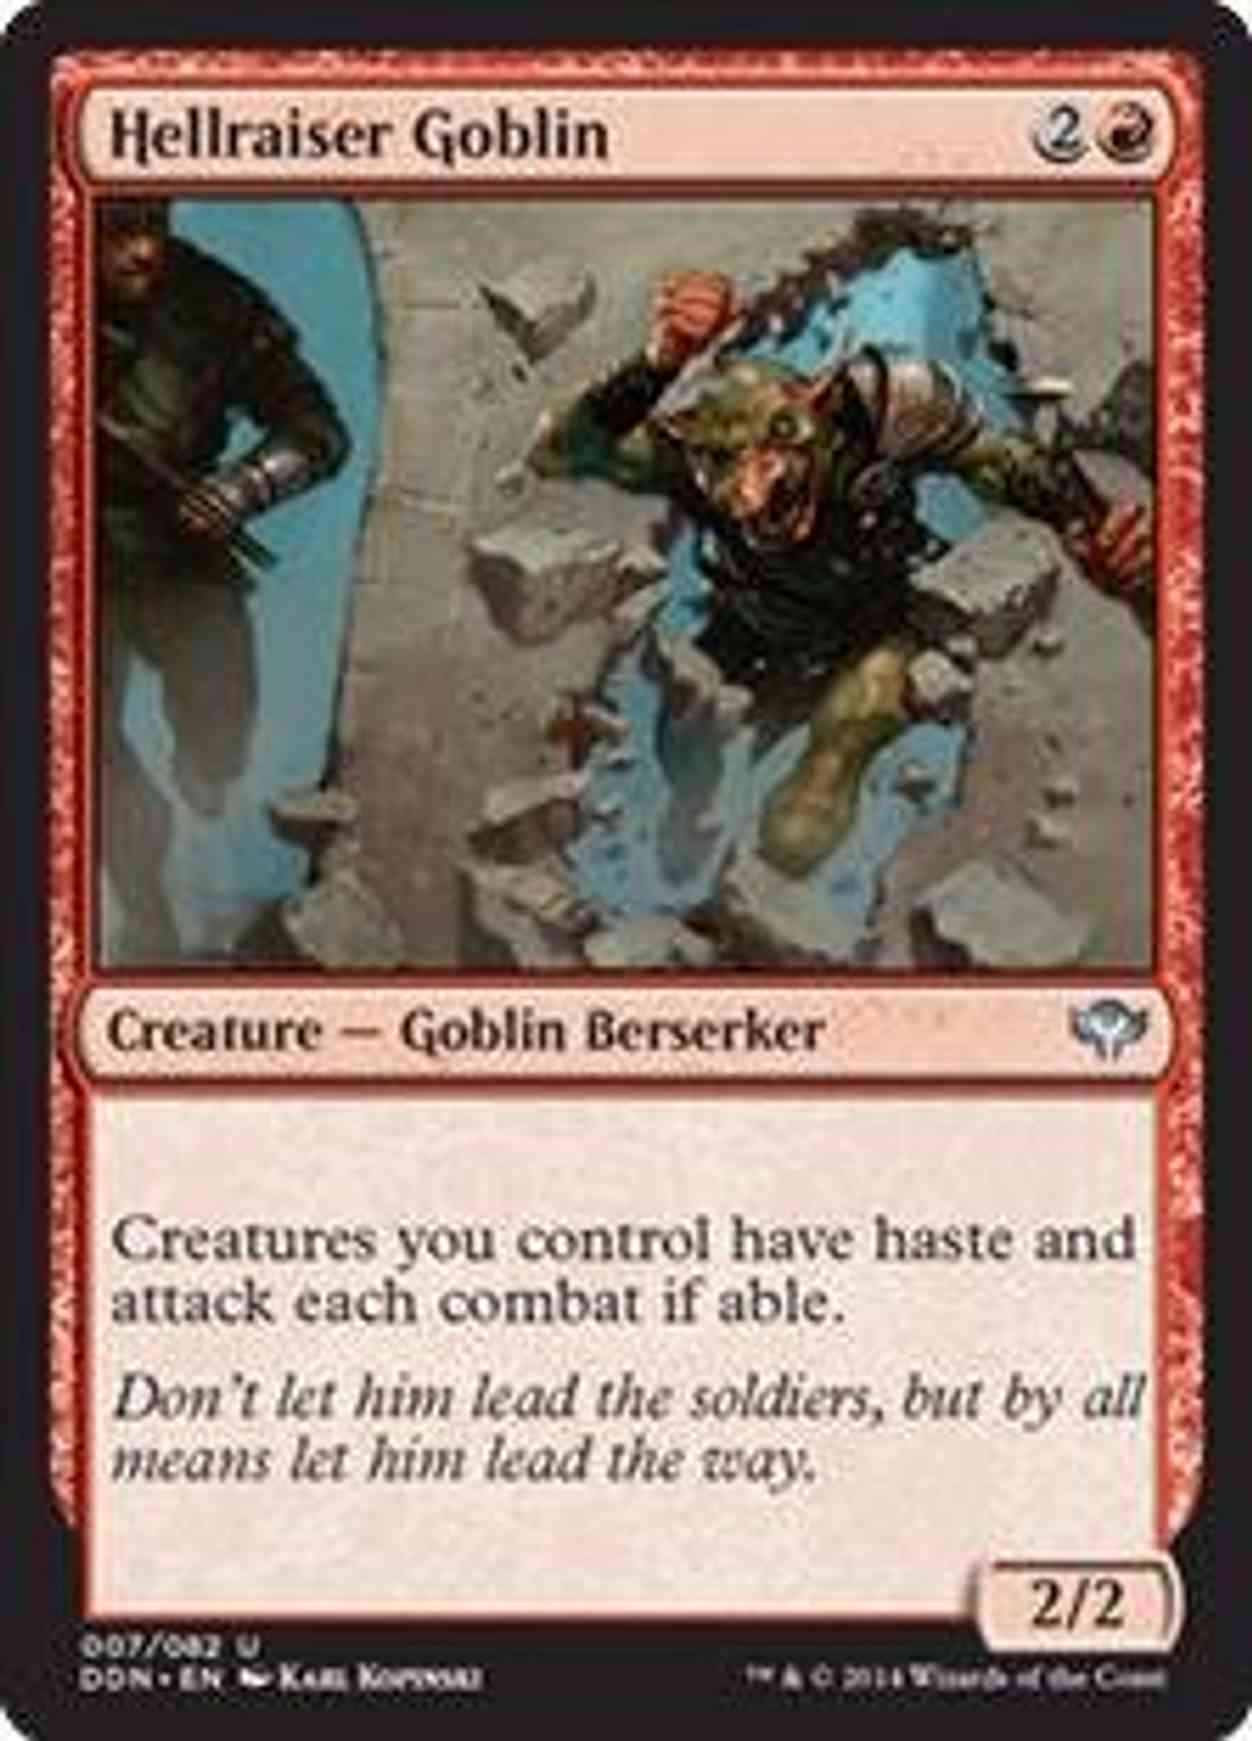 Hellraiser Goblin magic card front